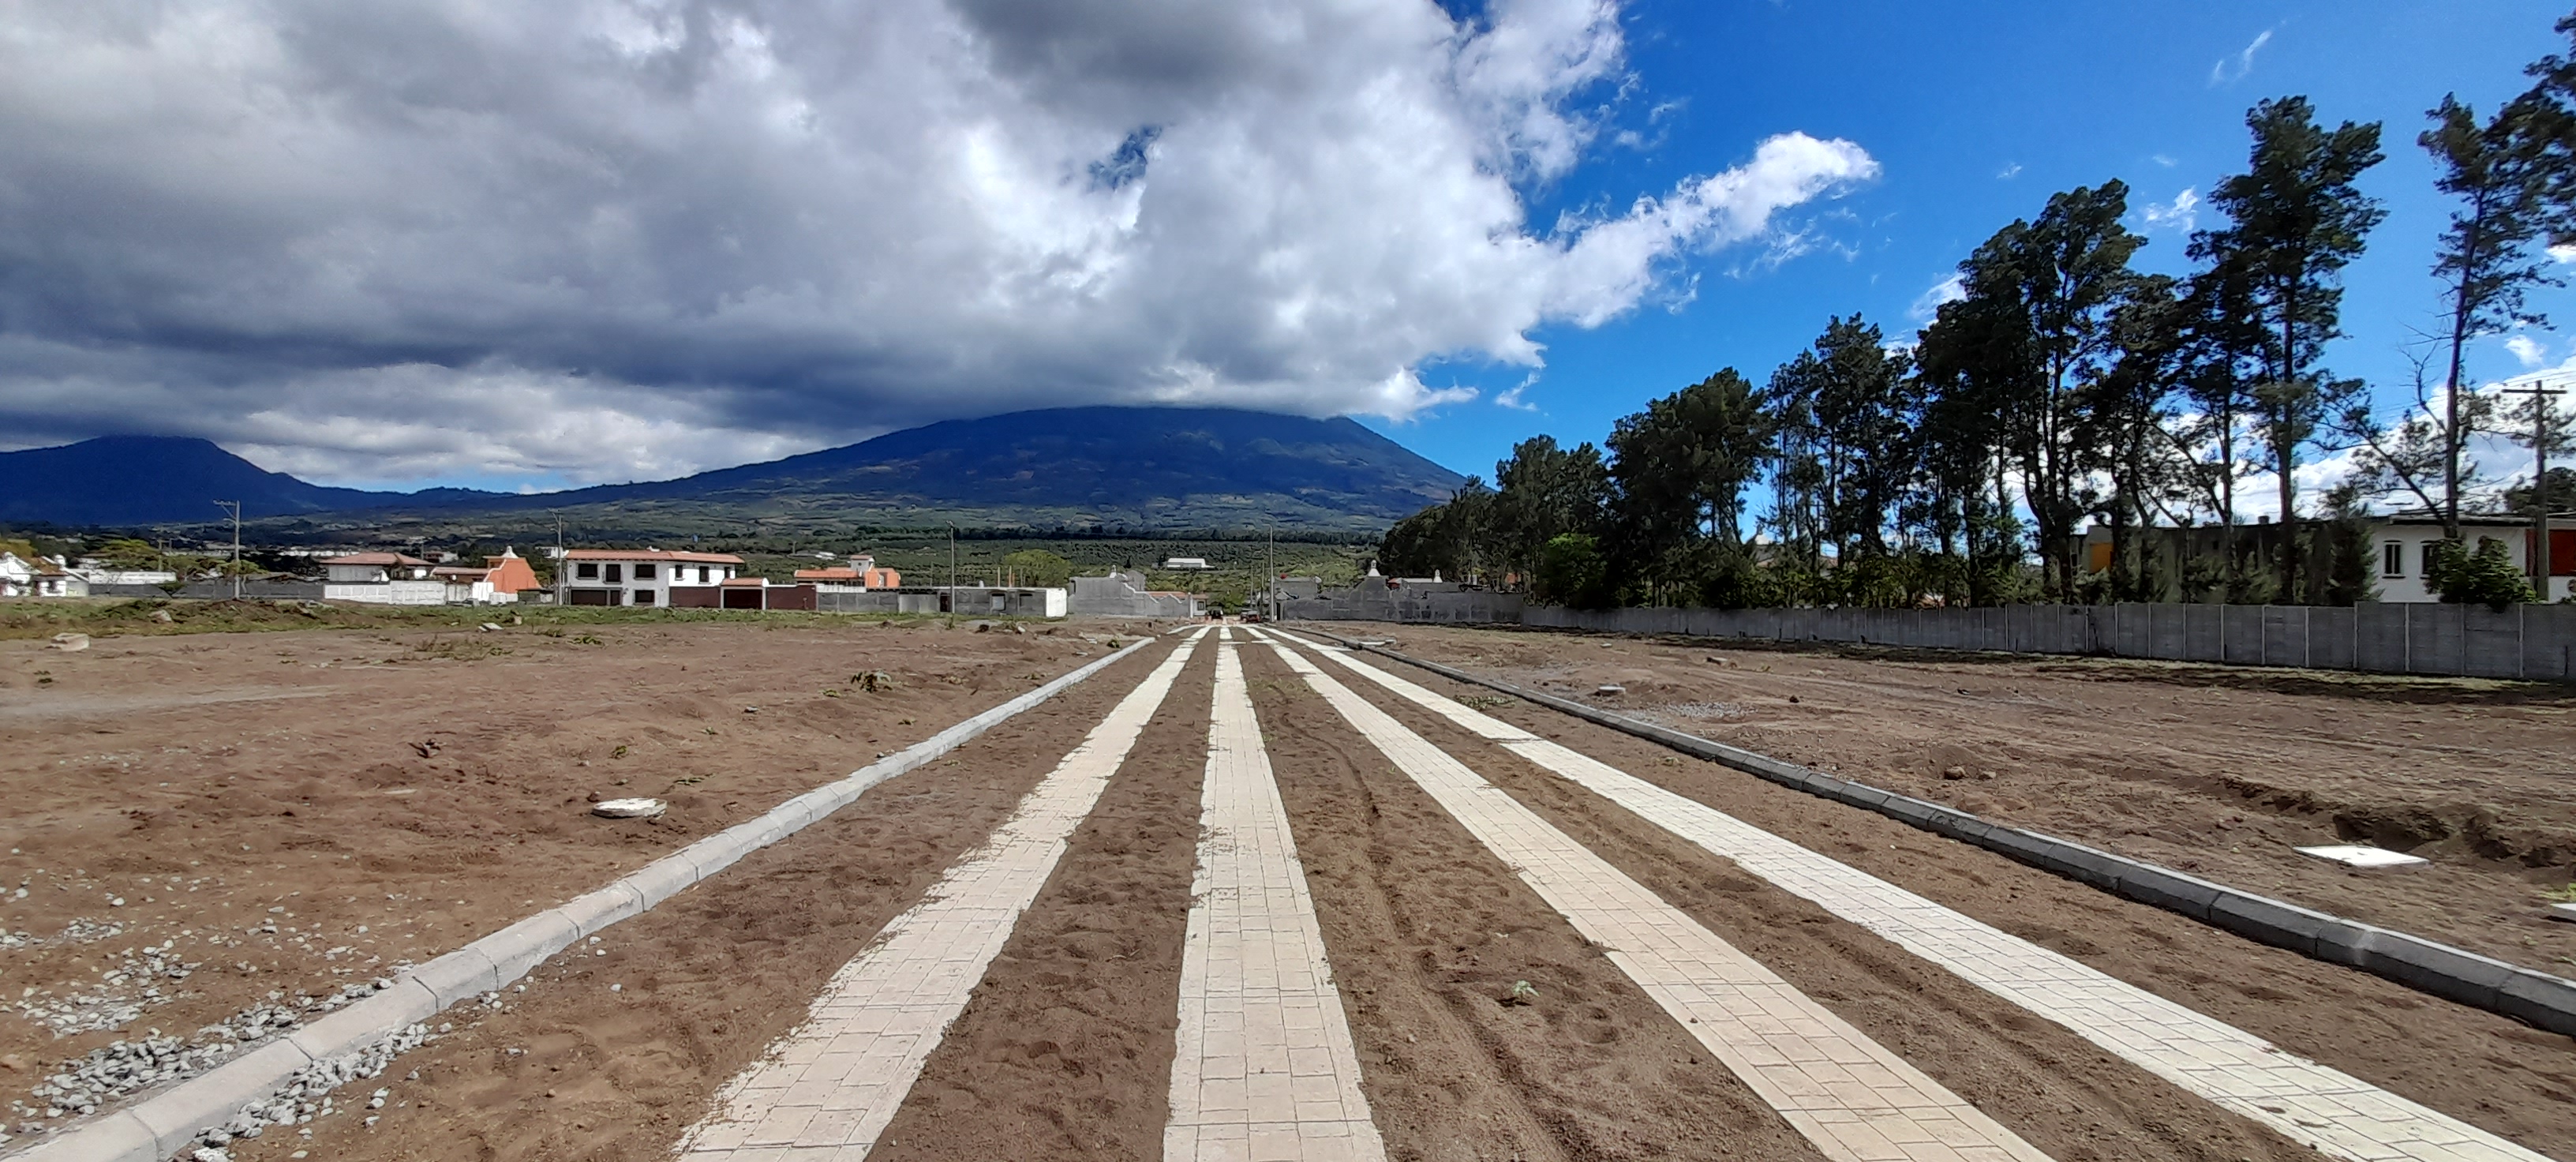 Terreno residencial en venta de 10x30 metros en a 25 min de #AntiguaGuatemala